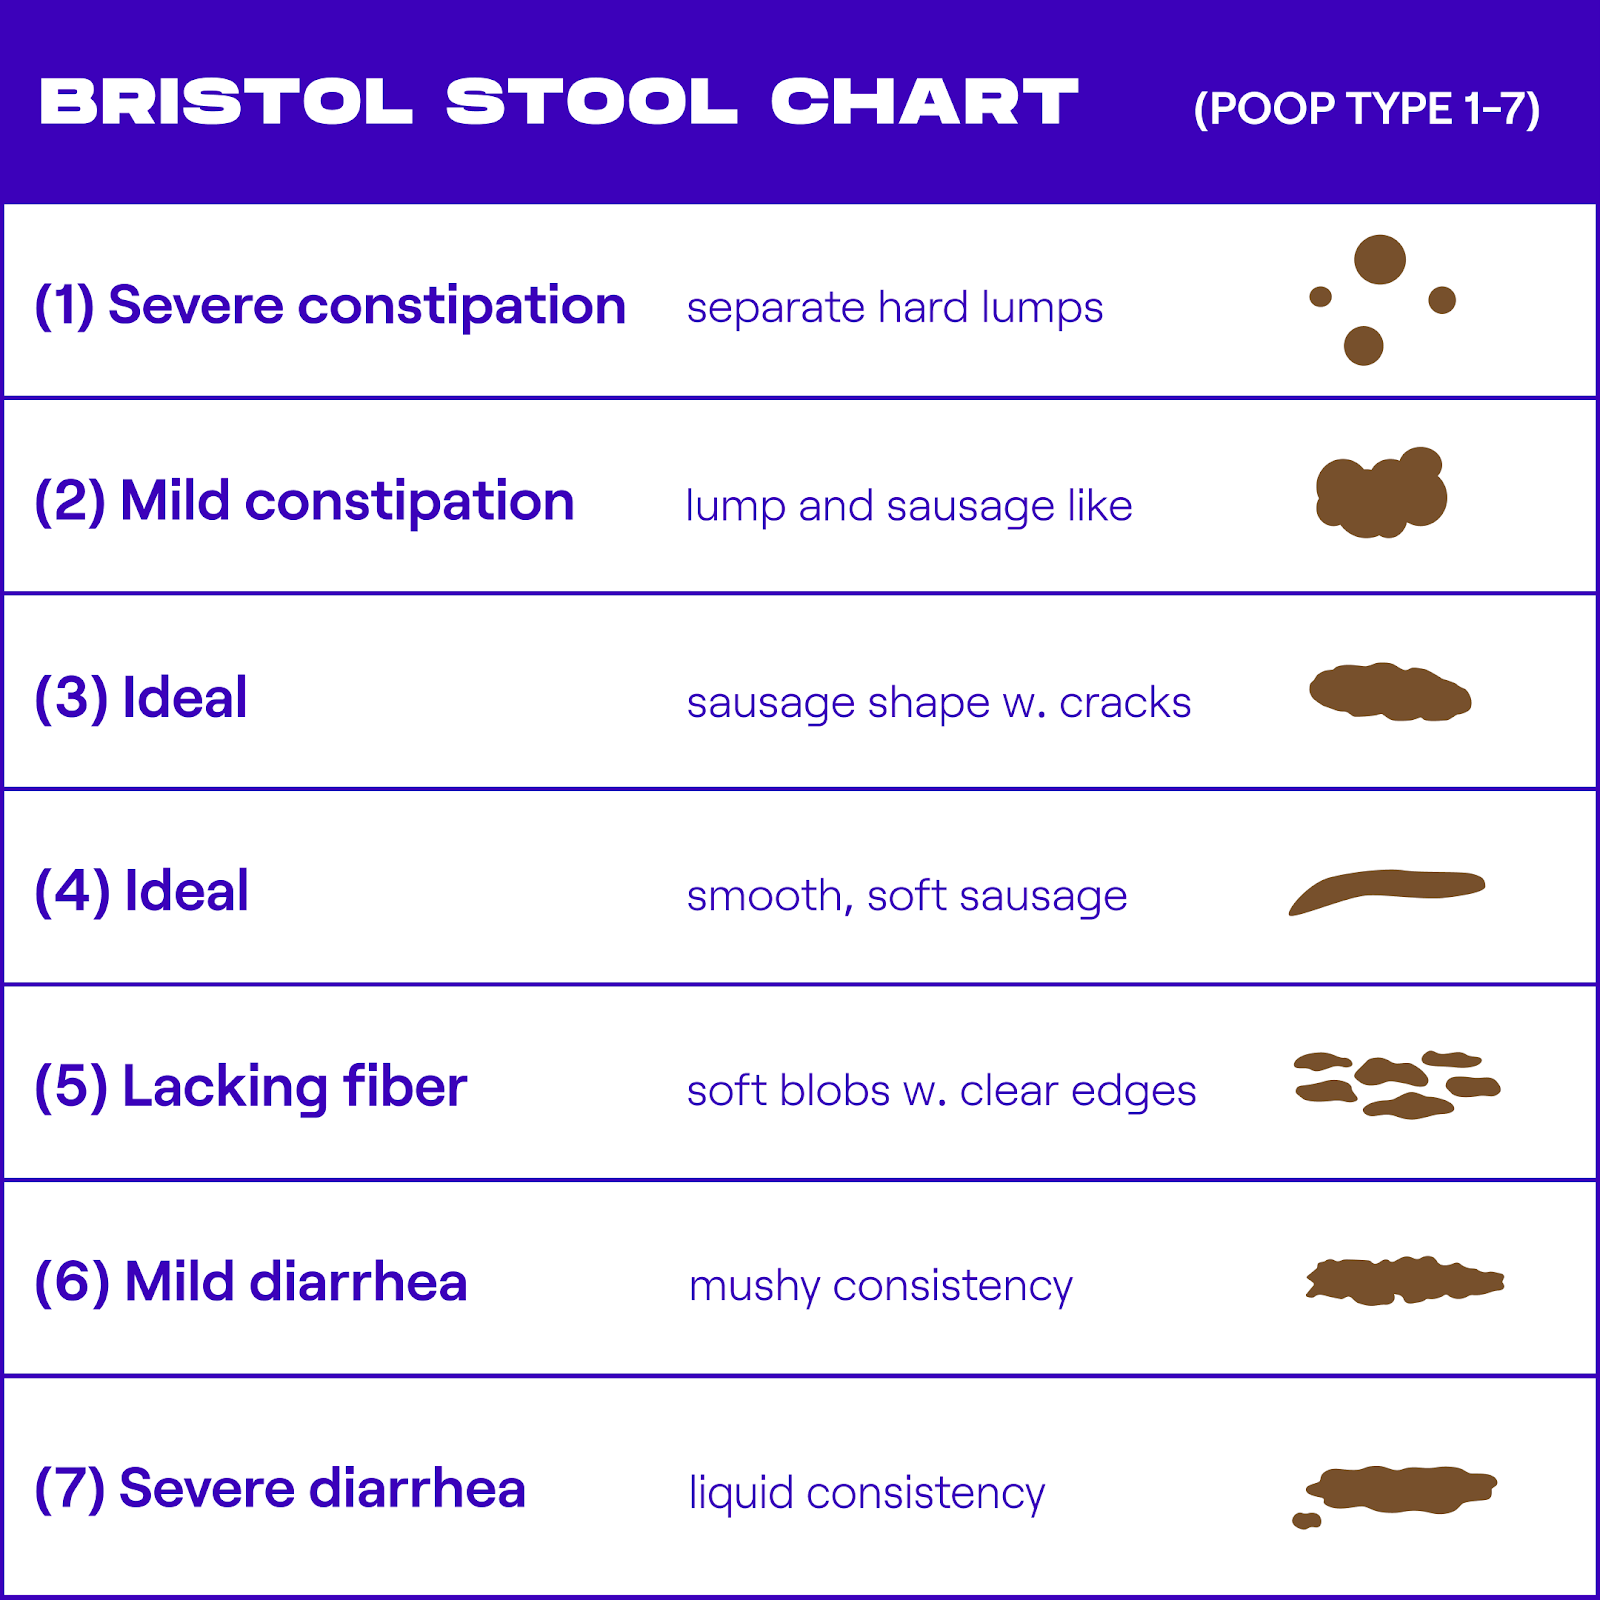 Bristol Stool Chart Type 8